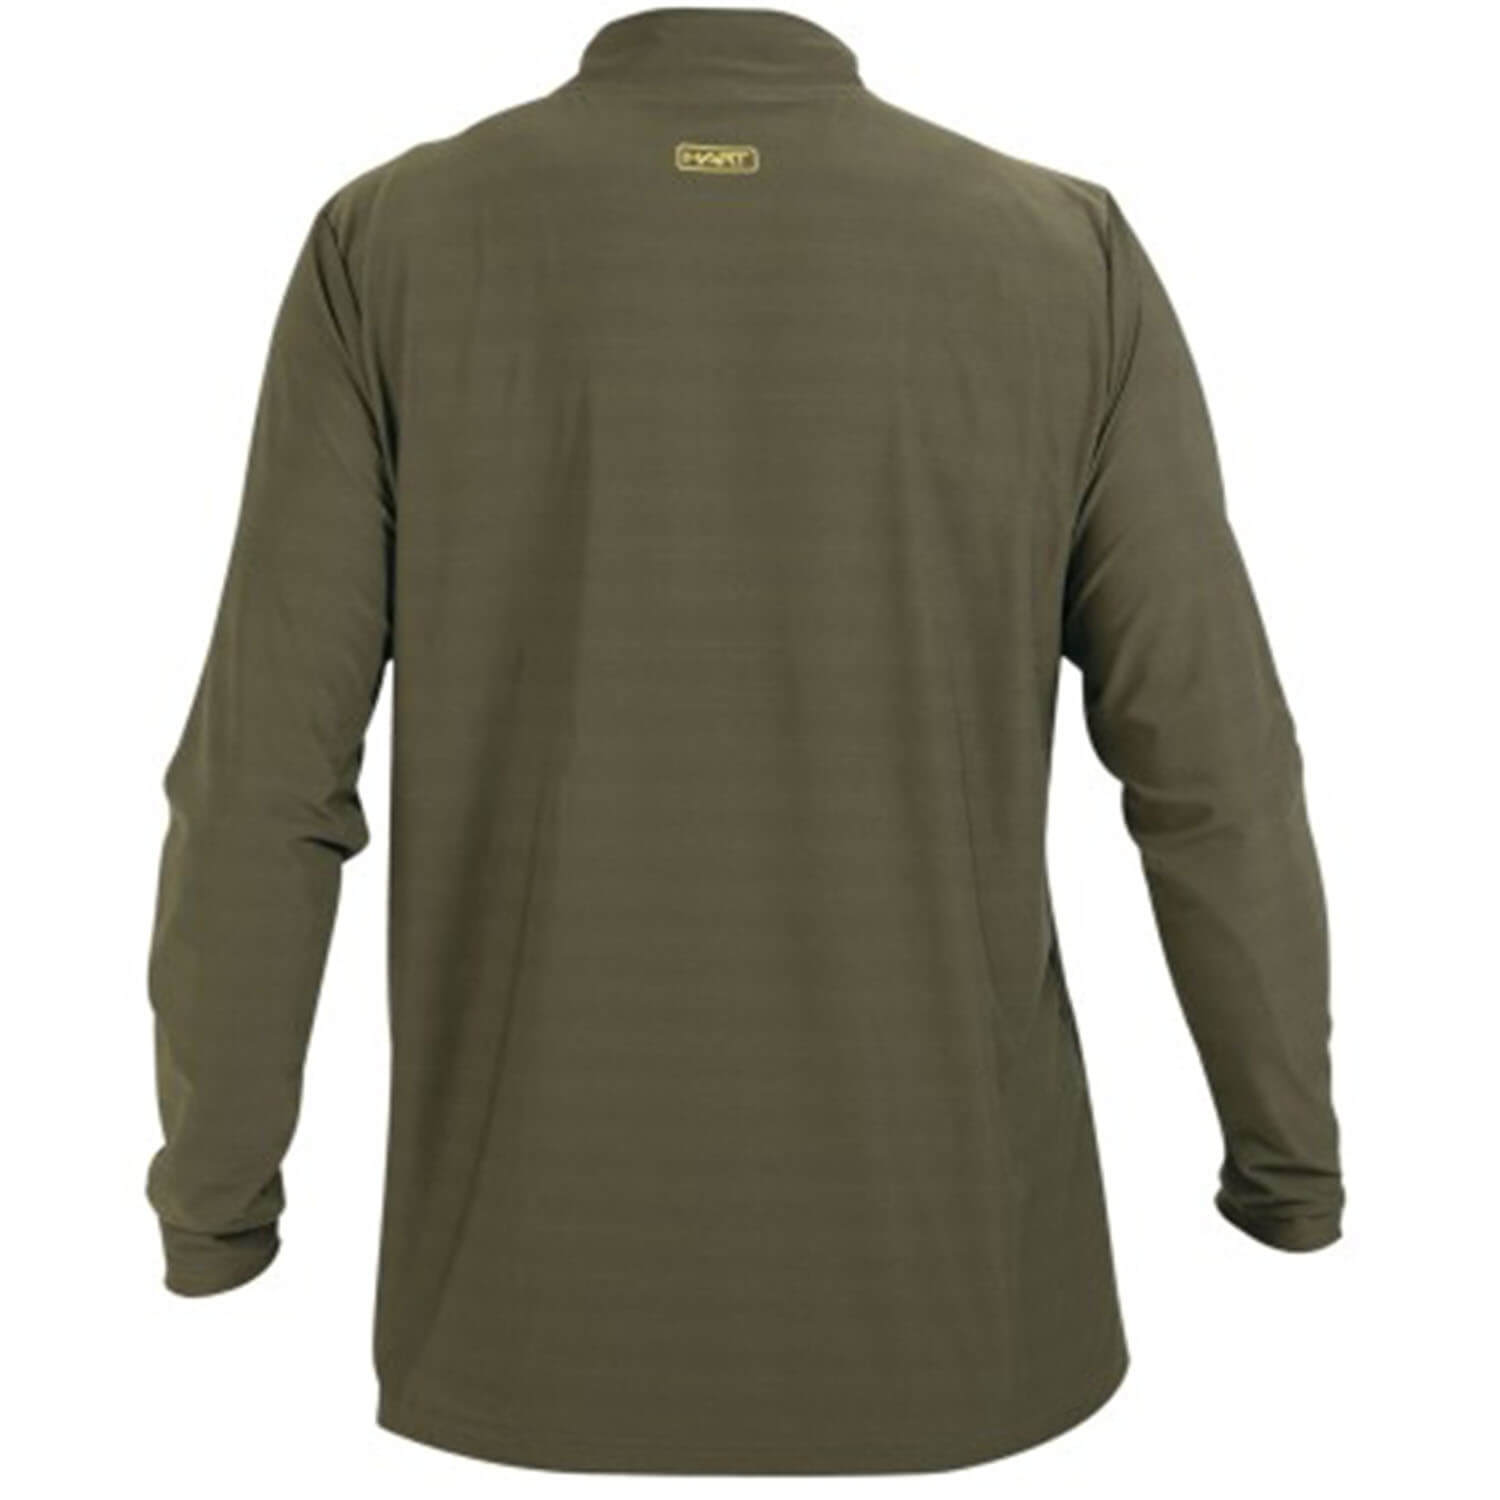  Hart Ural-ZN long-sleeved shirt (green)